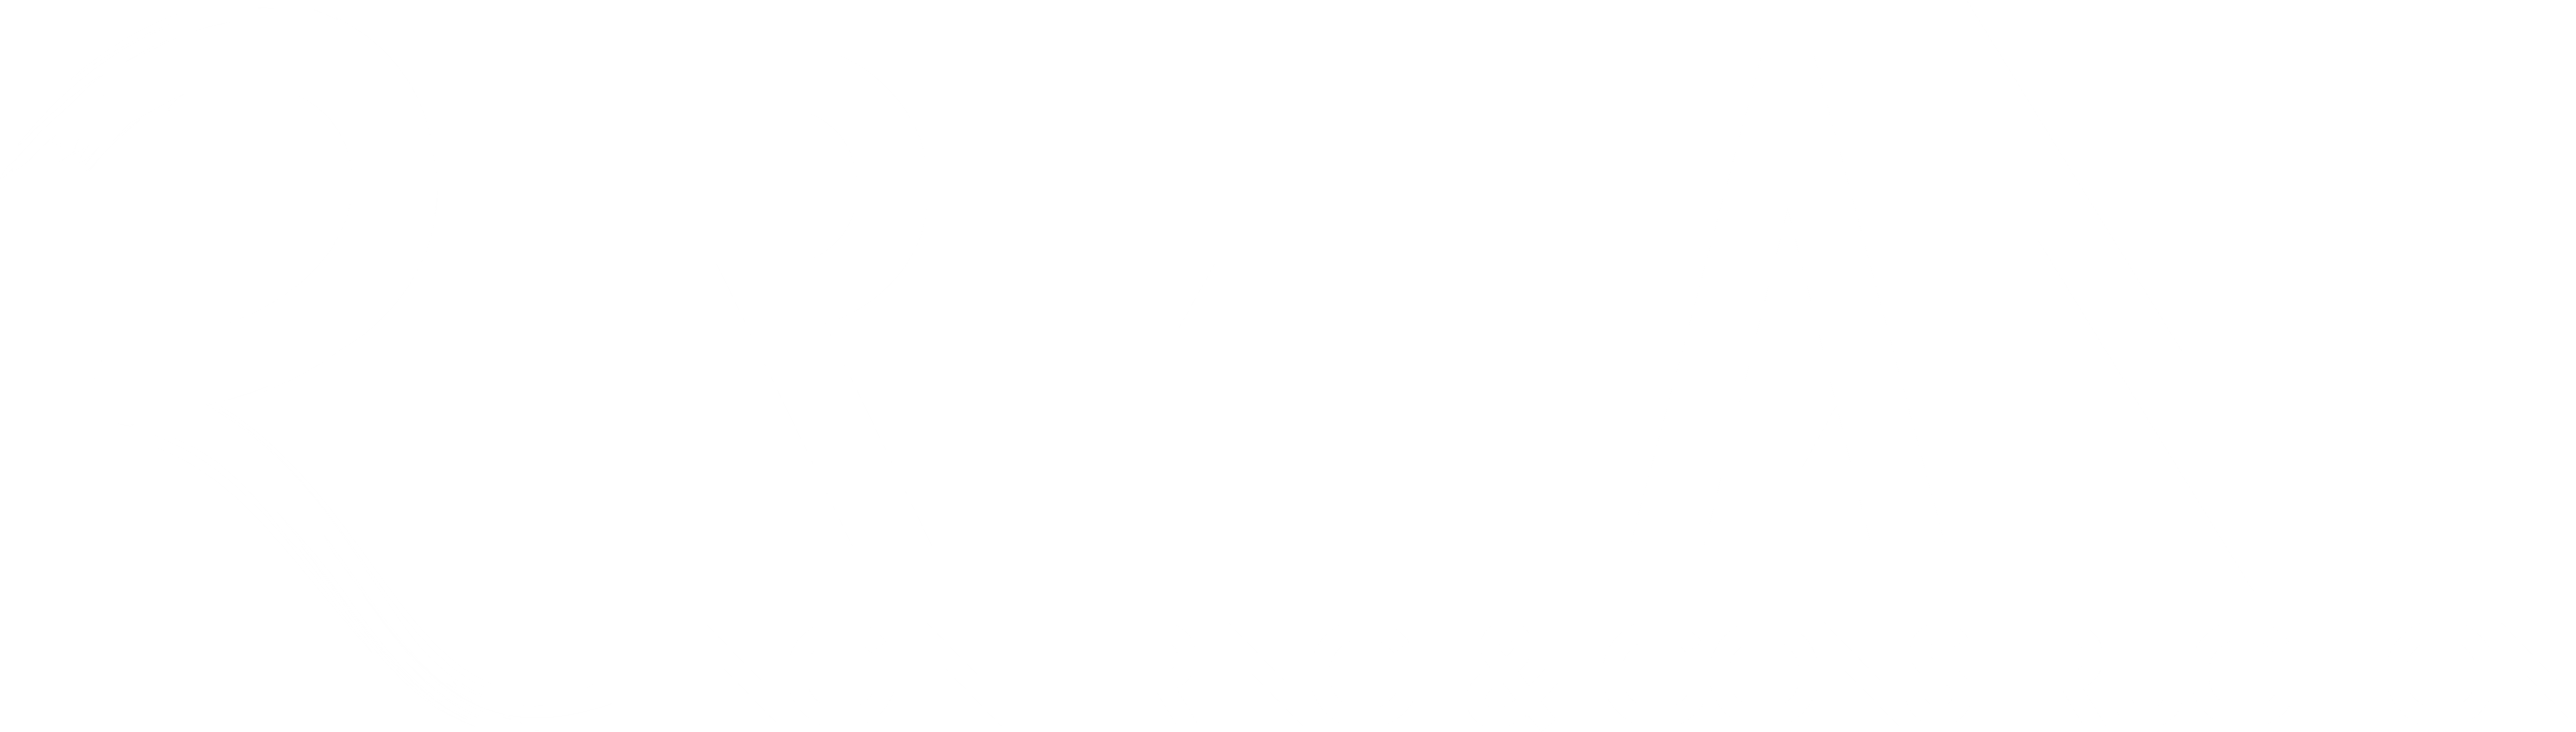 Reliant Engineering & Construction